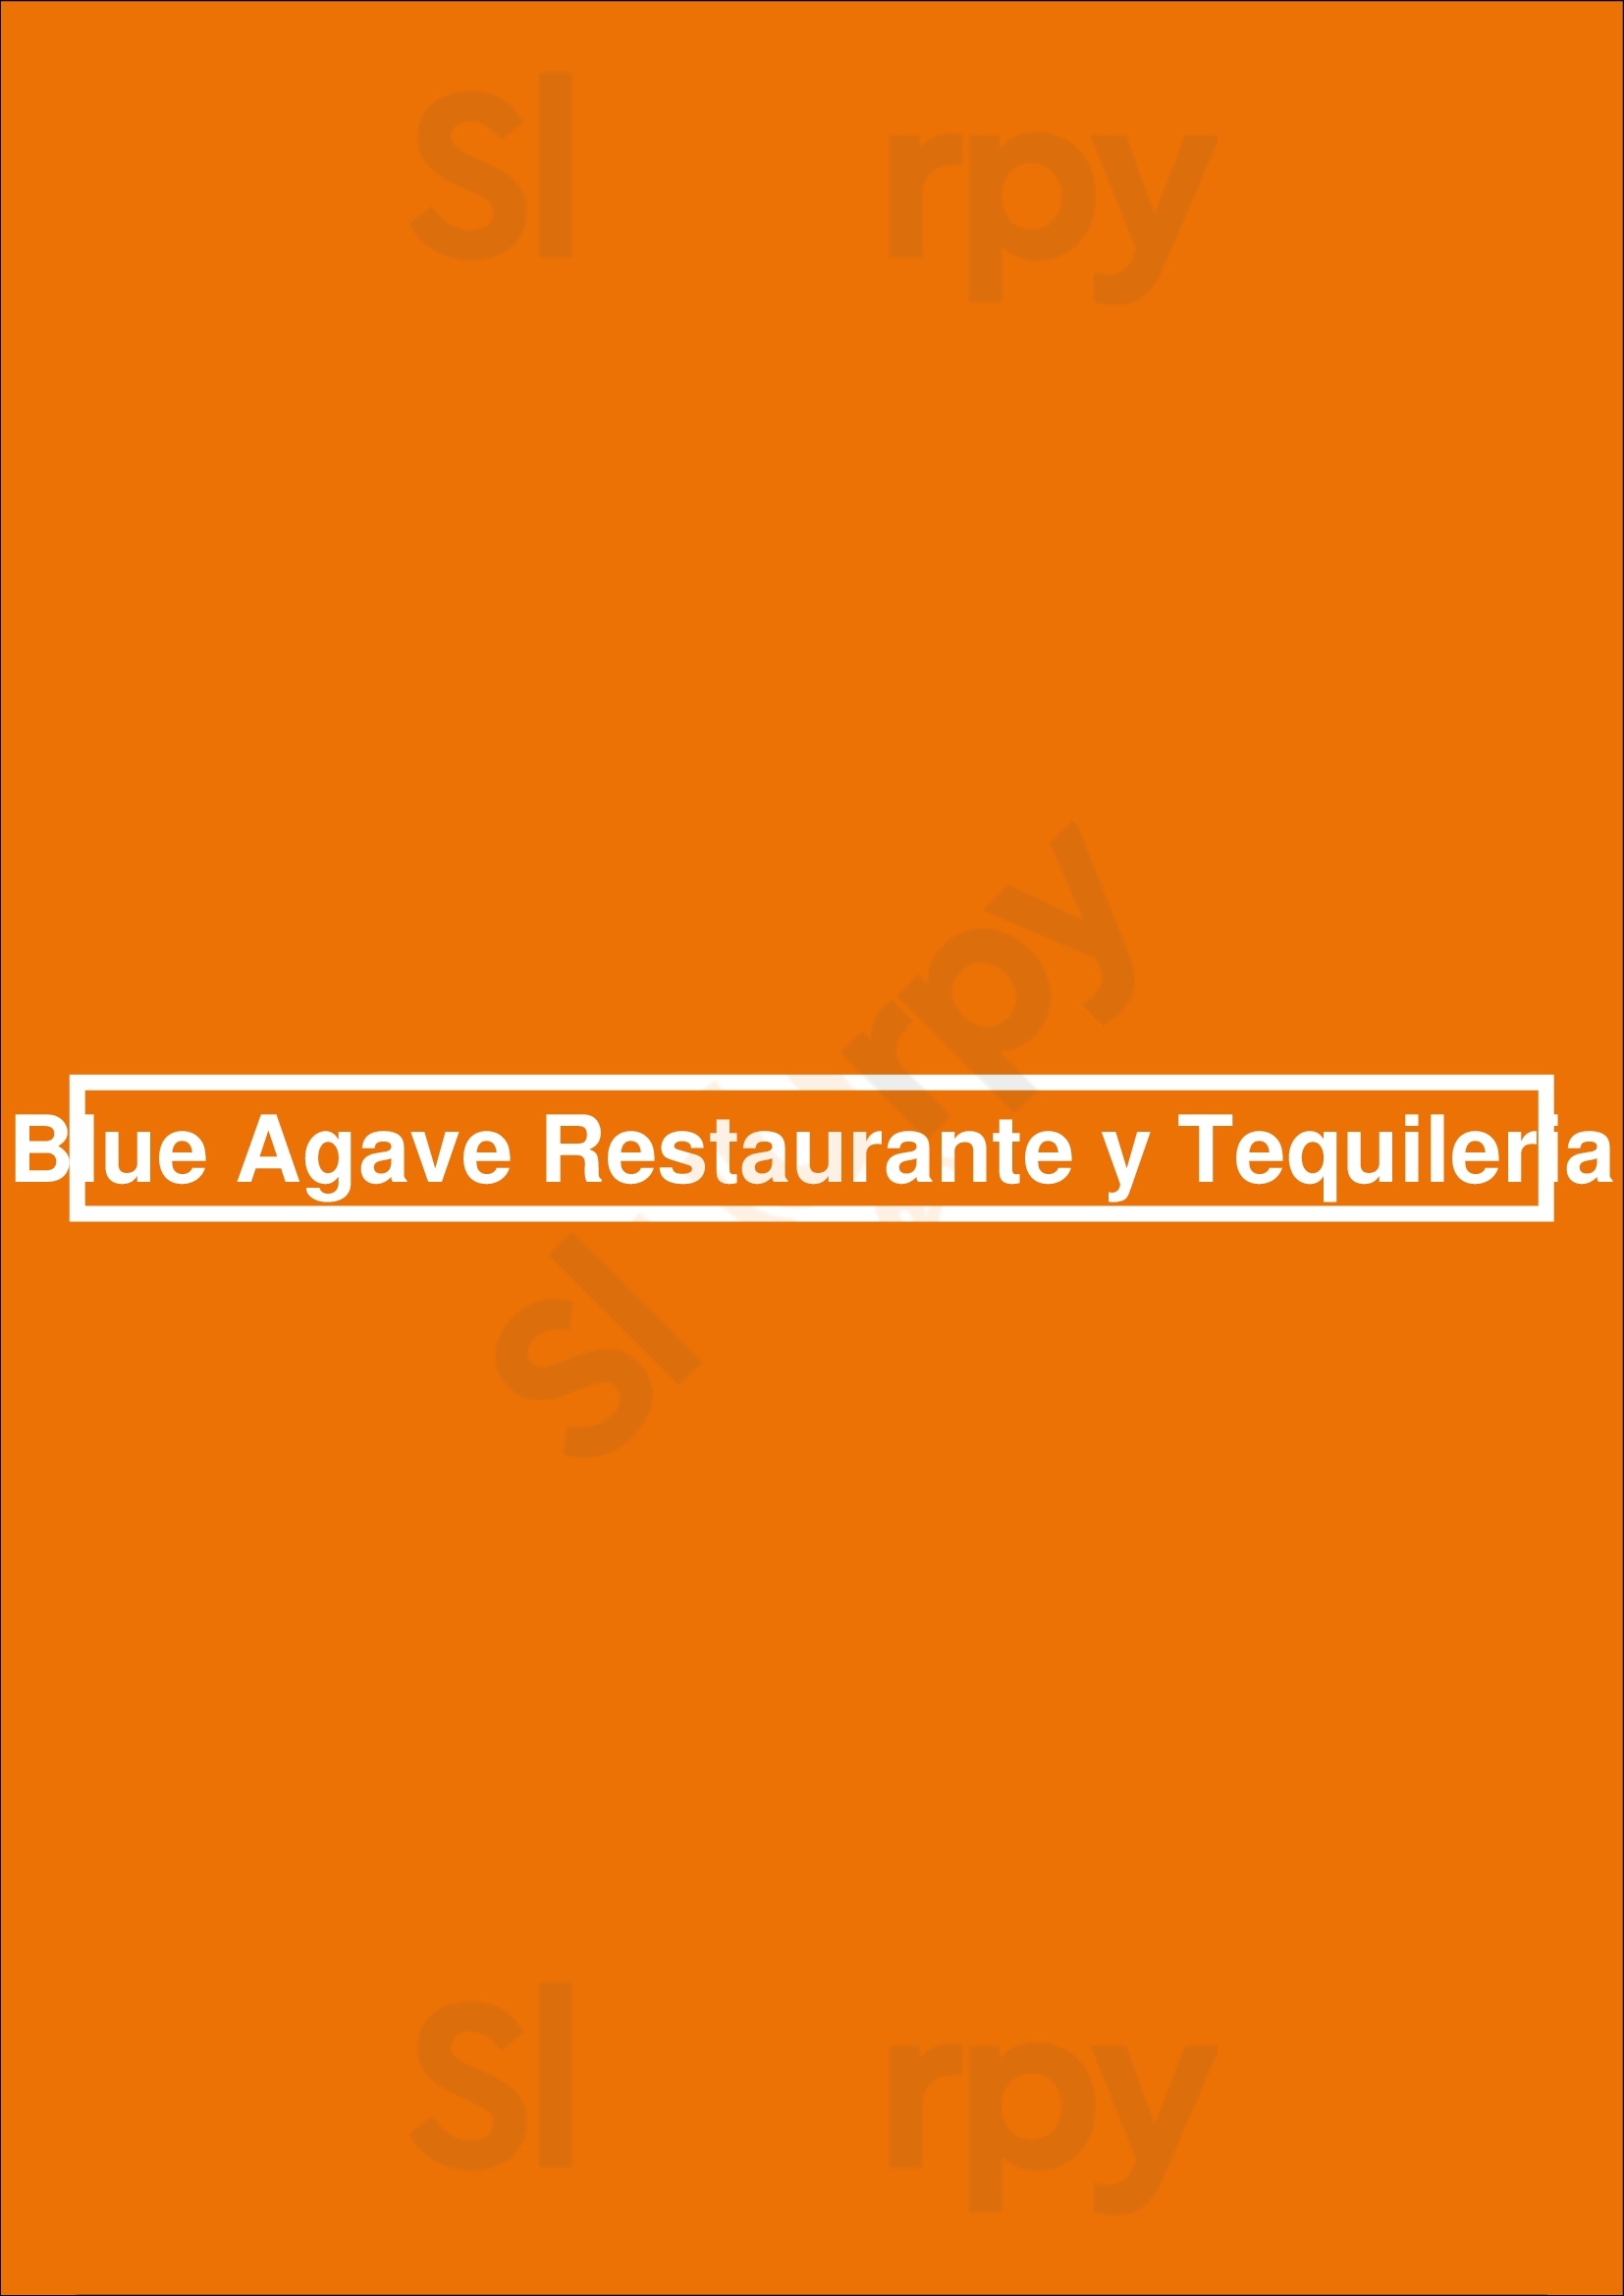 Blue Agave Restaurante Y Tequileria Baltimore Menu - 1